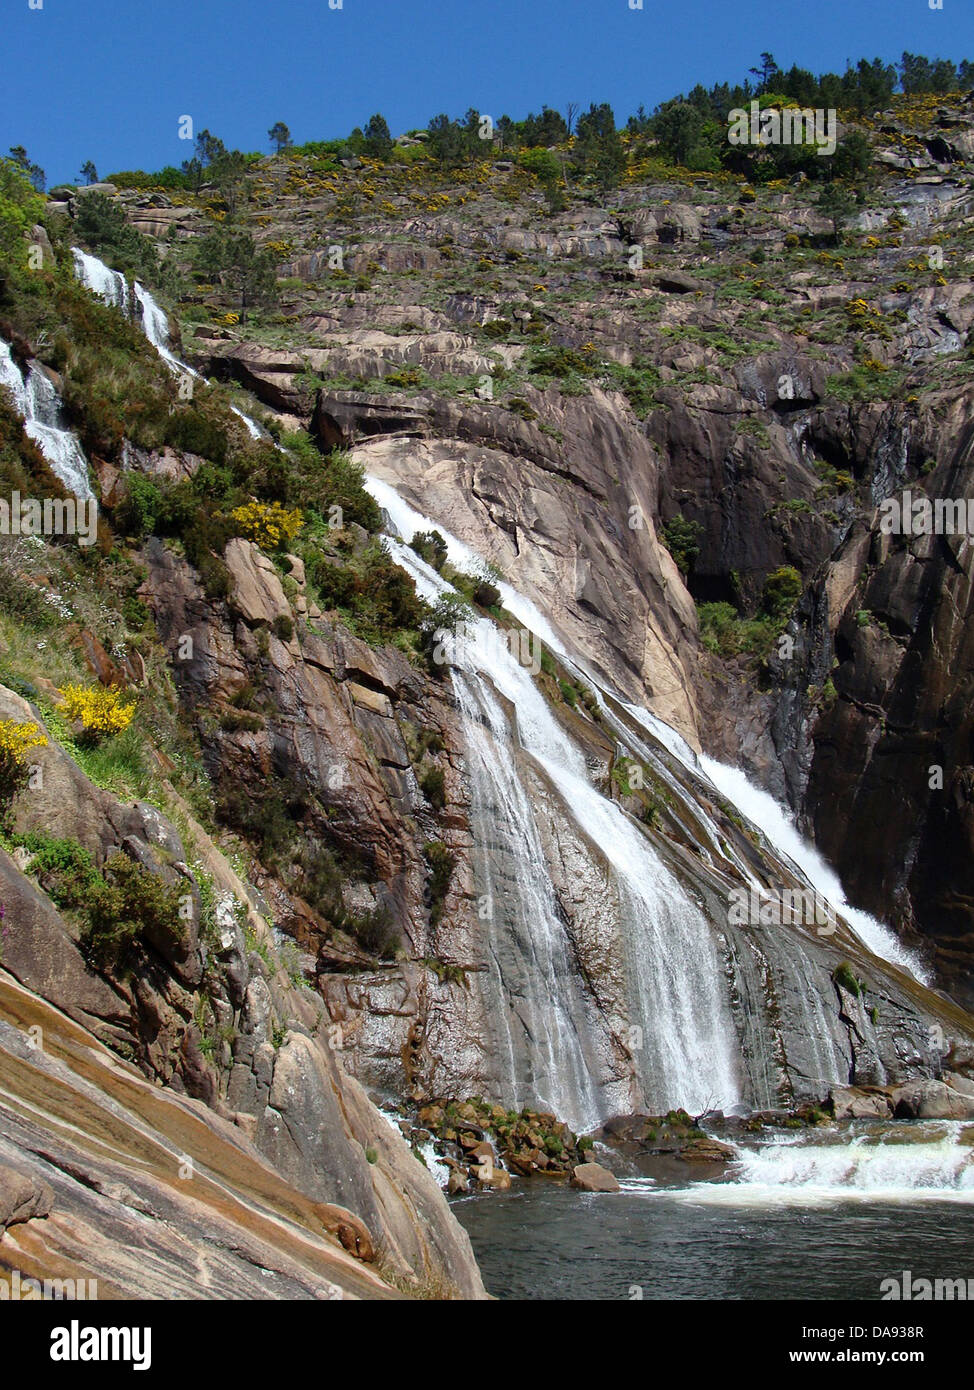 coruna spain landscape waterfall mountain trees Stock Photo